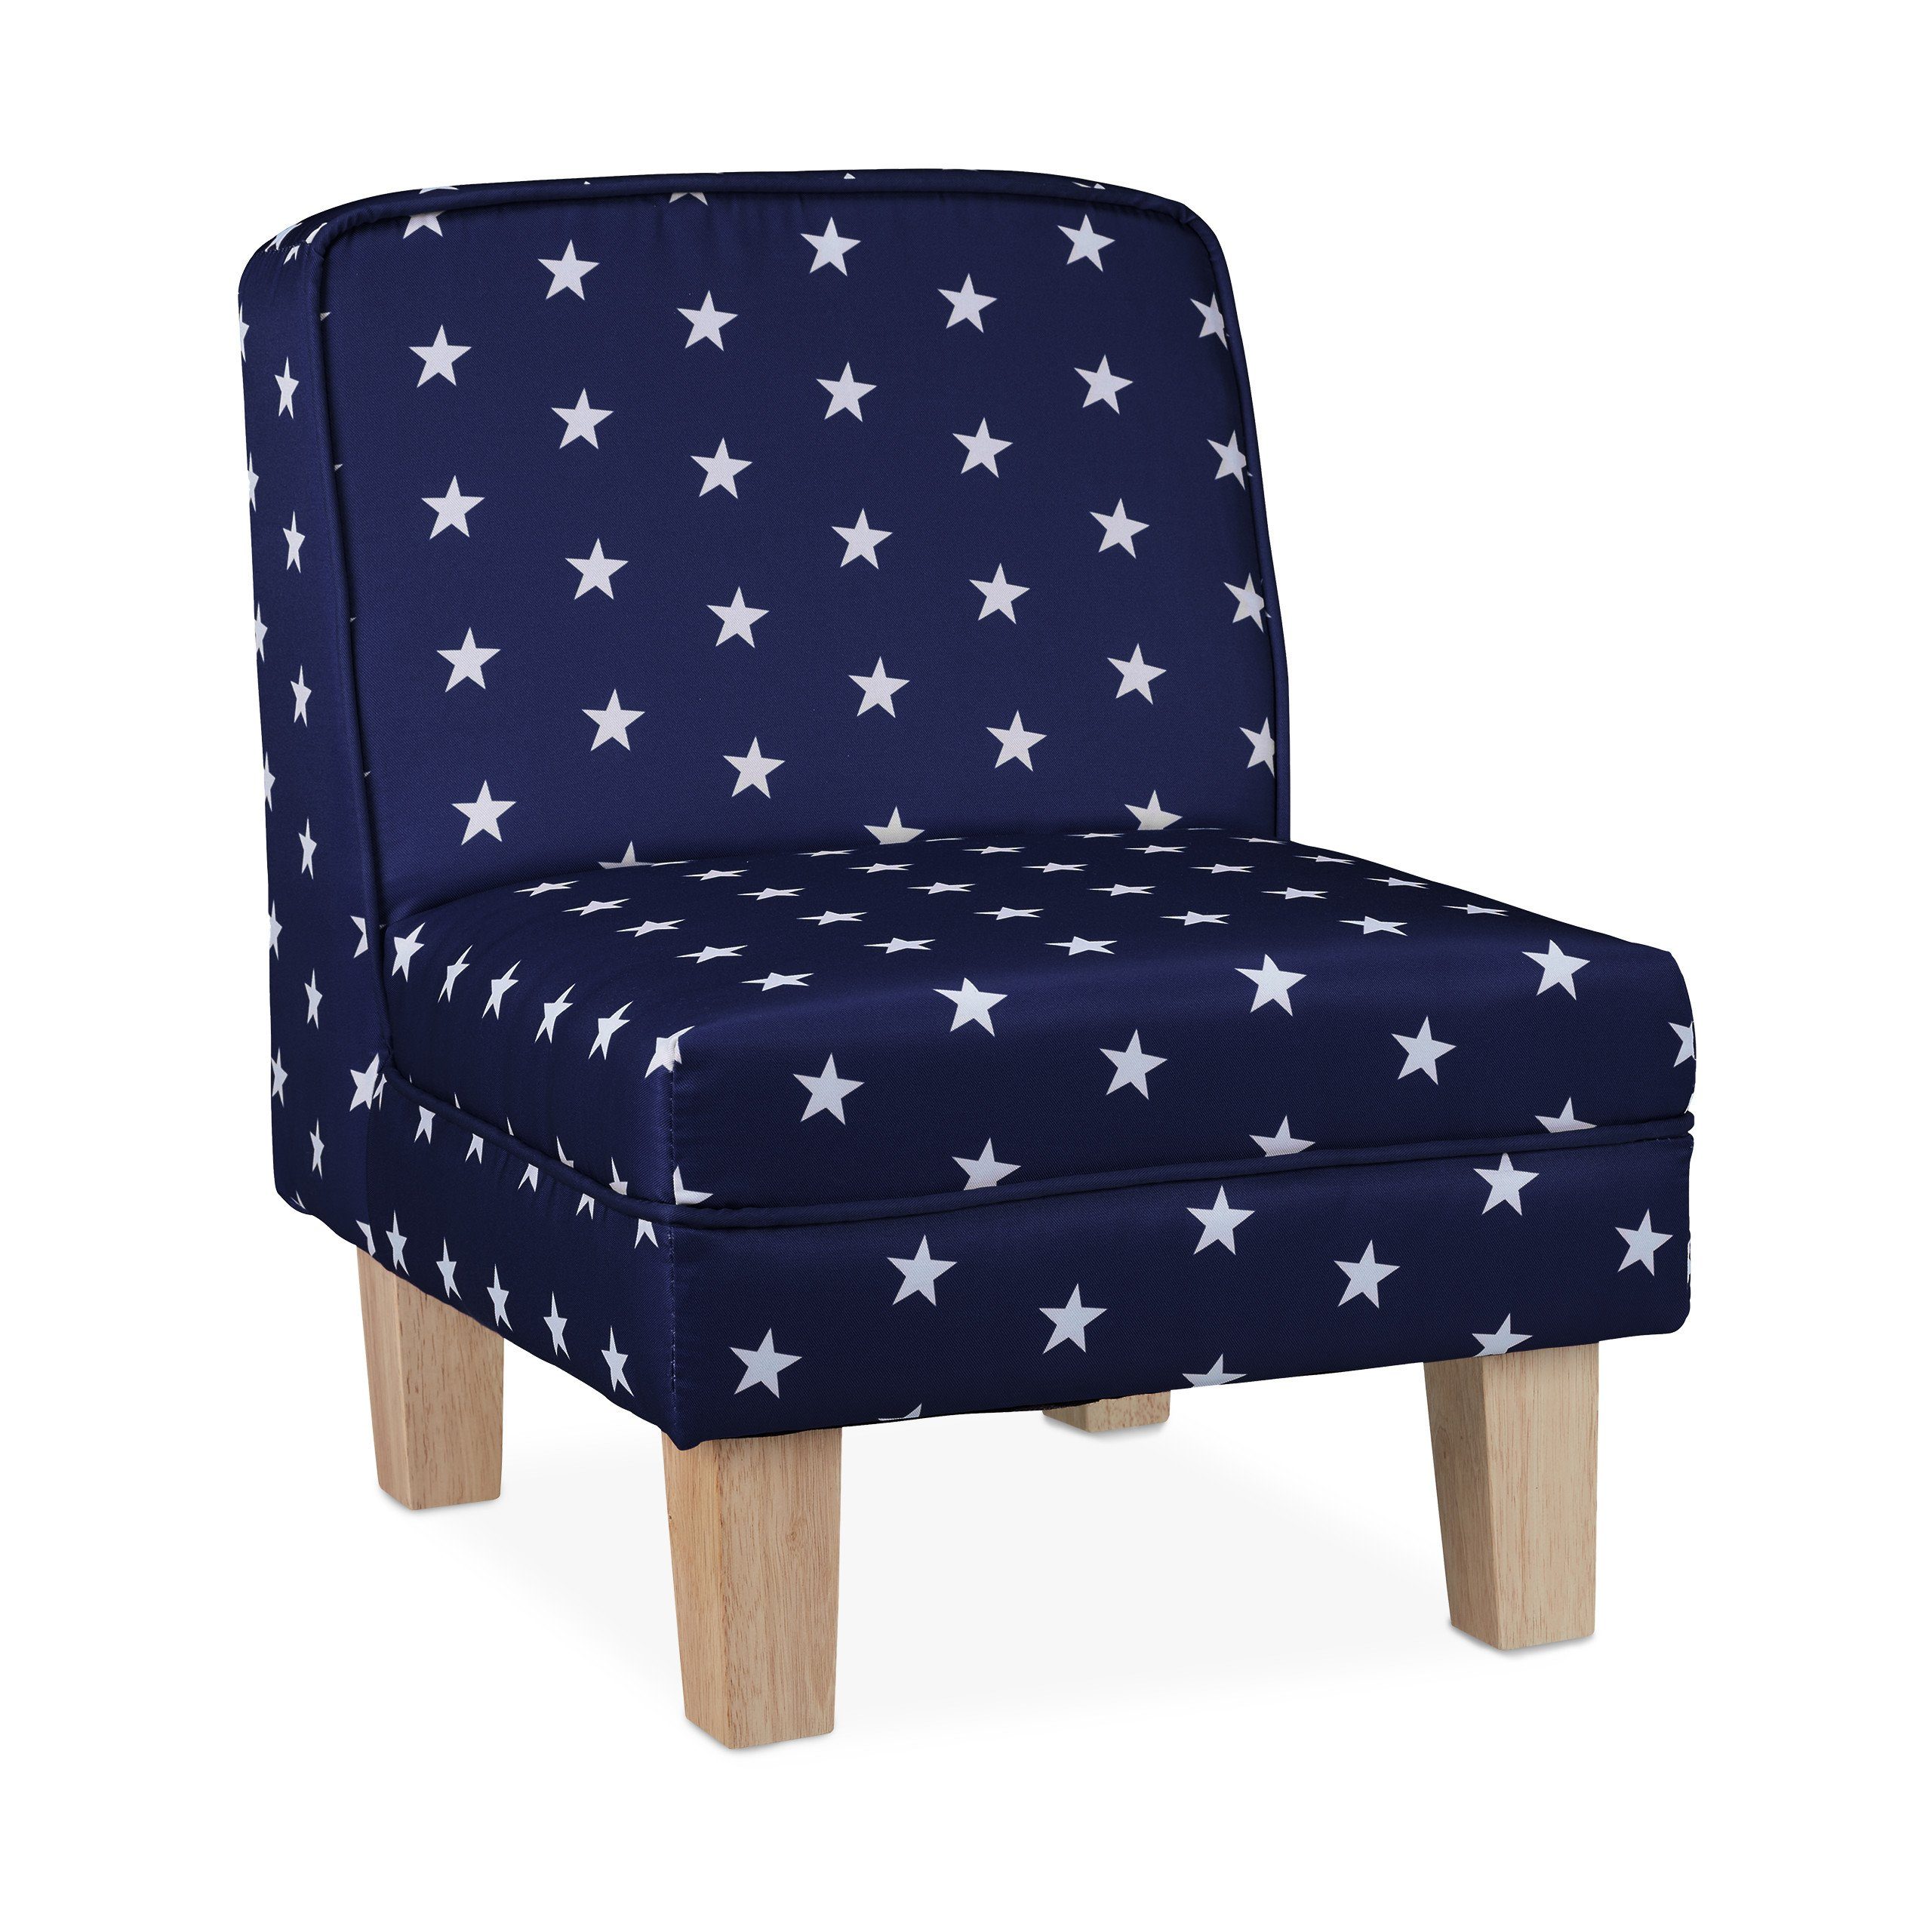 relaxdays Sessel Kindersessel mit Sternen, Dunkelblau Dunkelblau Hellbraun Weiß